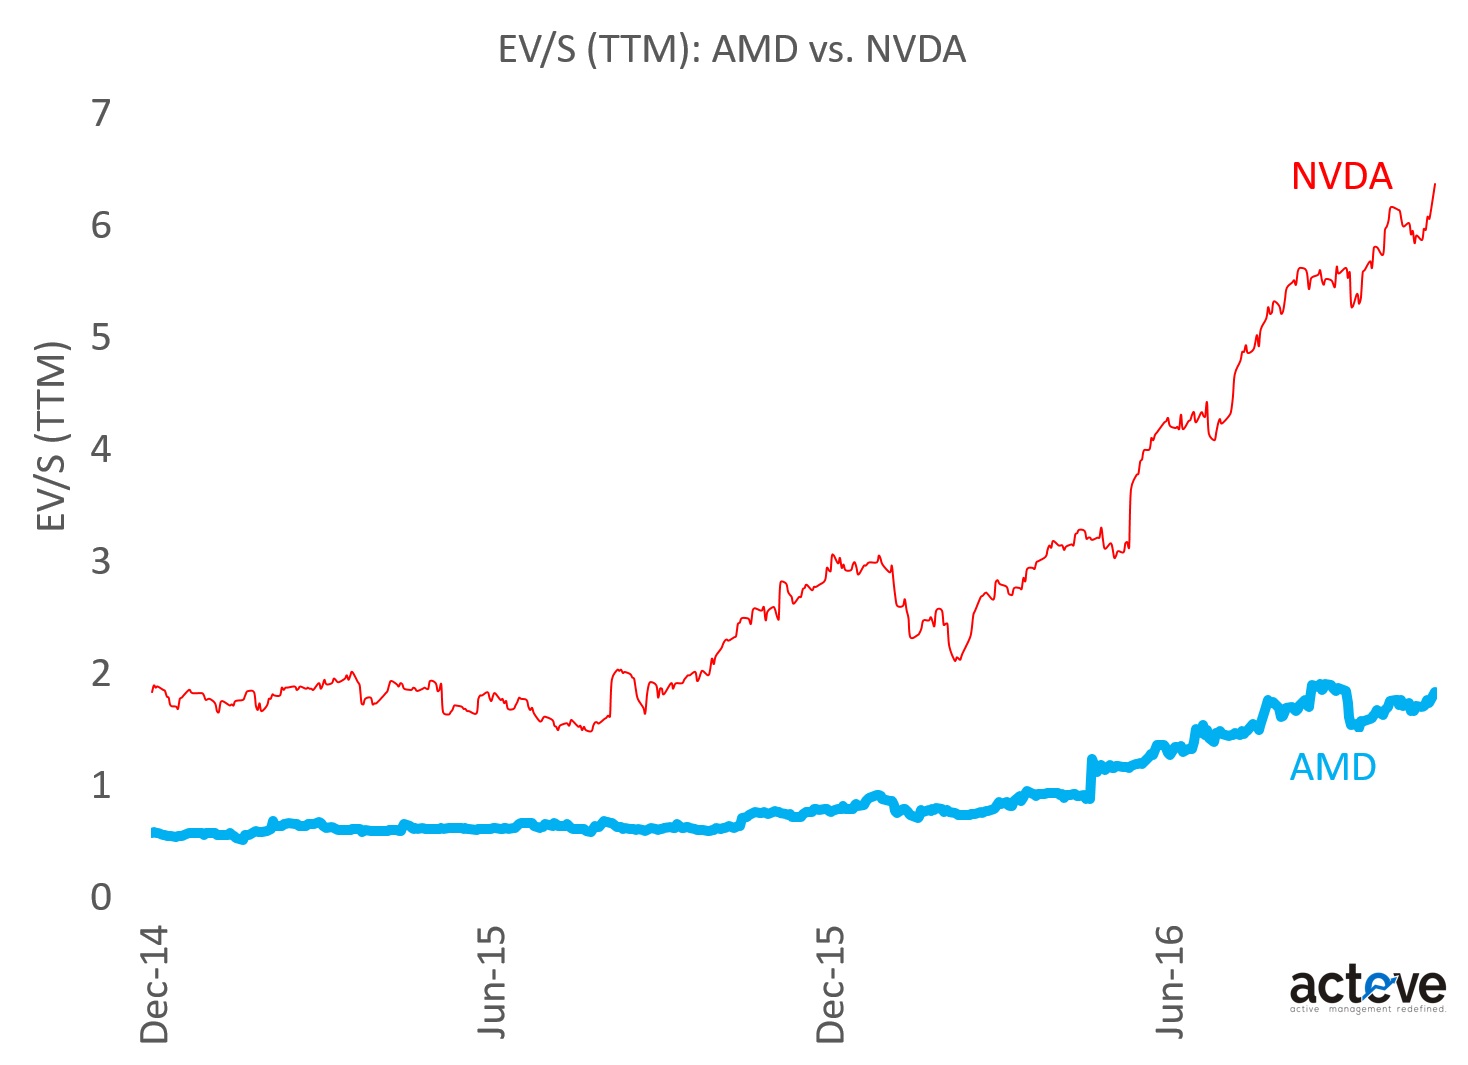 AMD vs. NVDA EV/S (TTM)